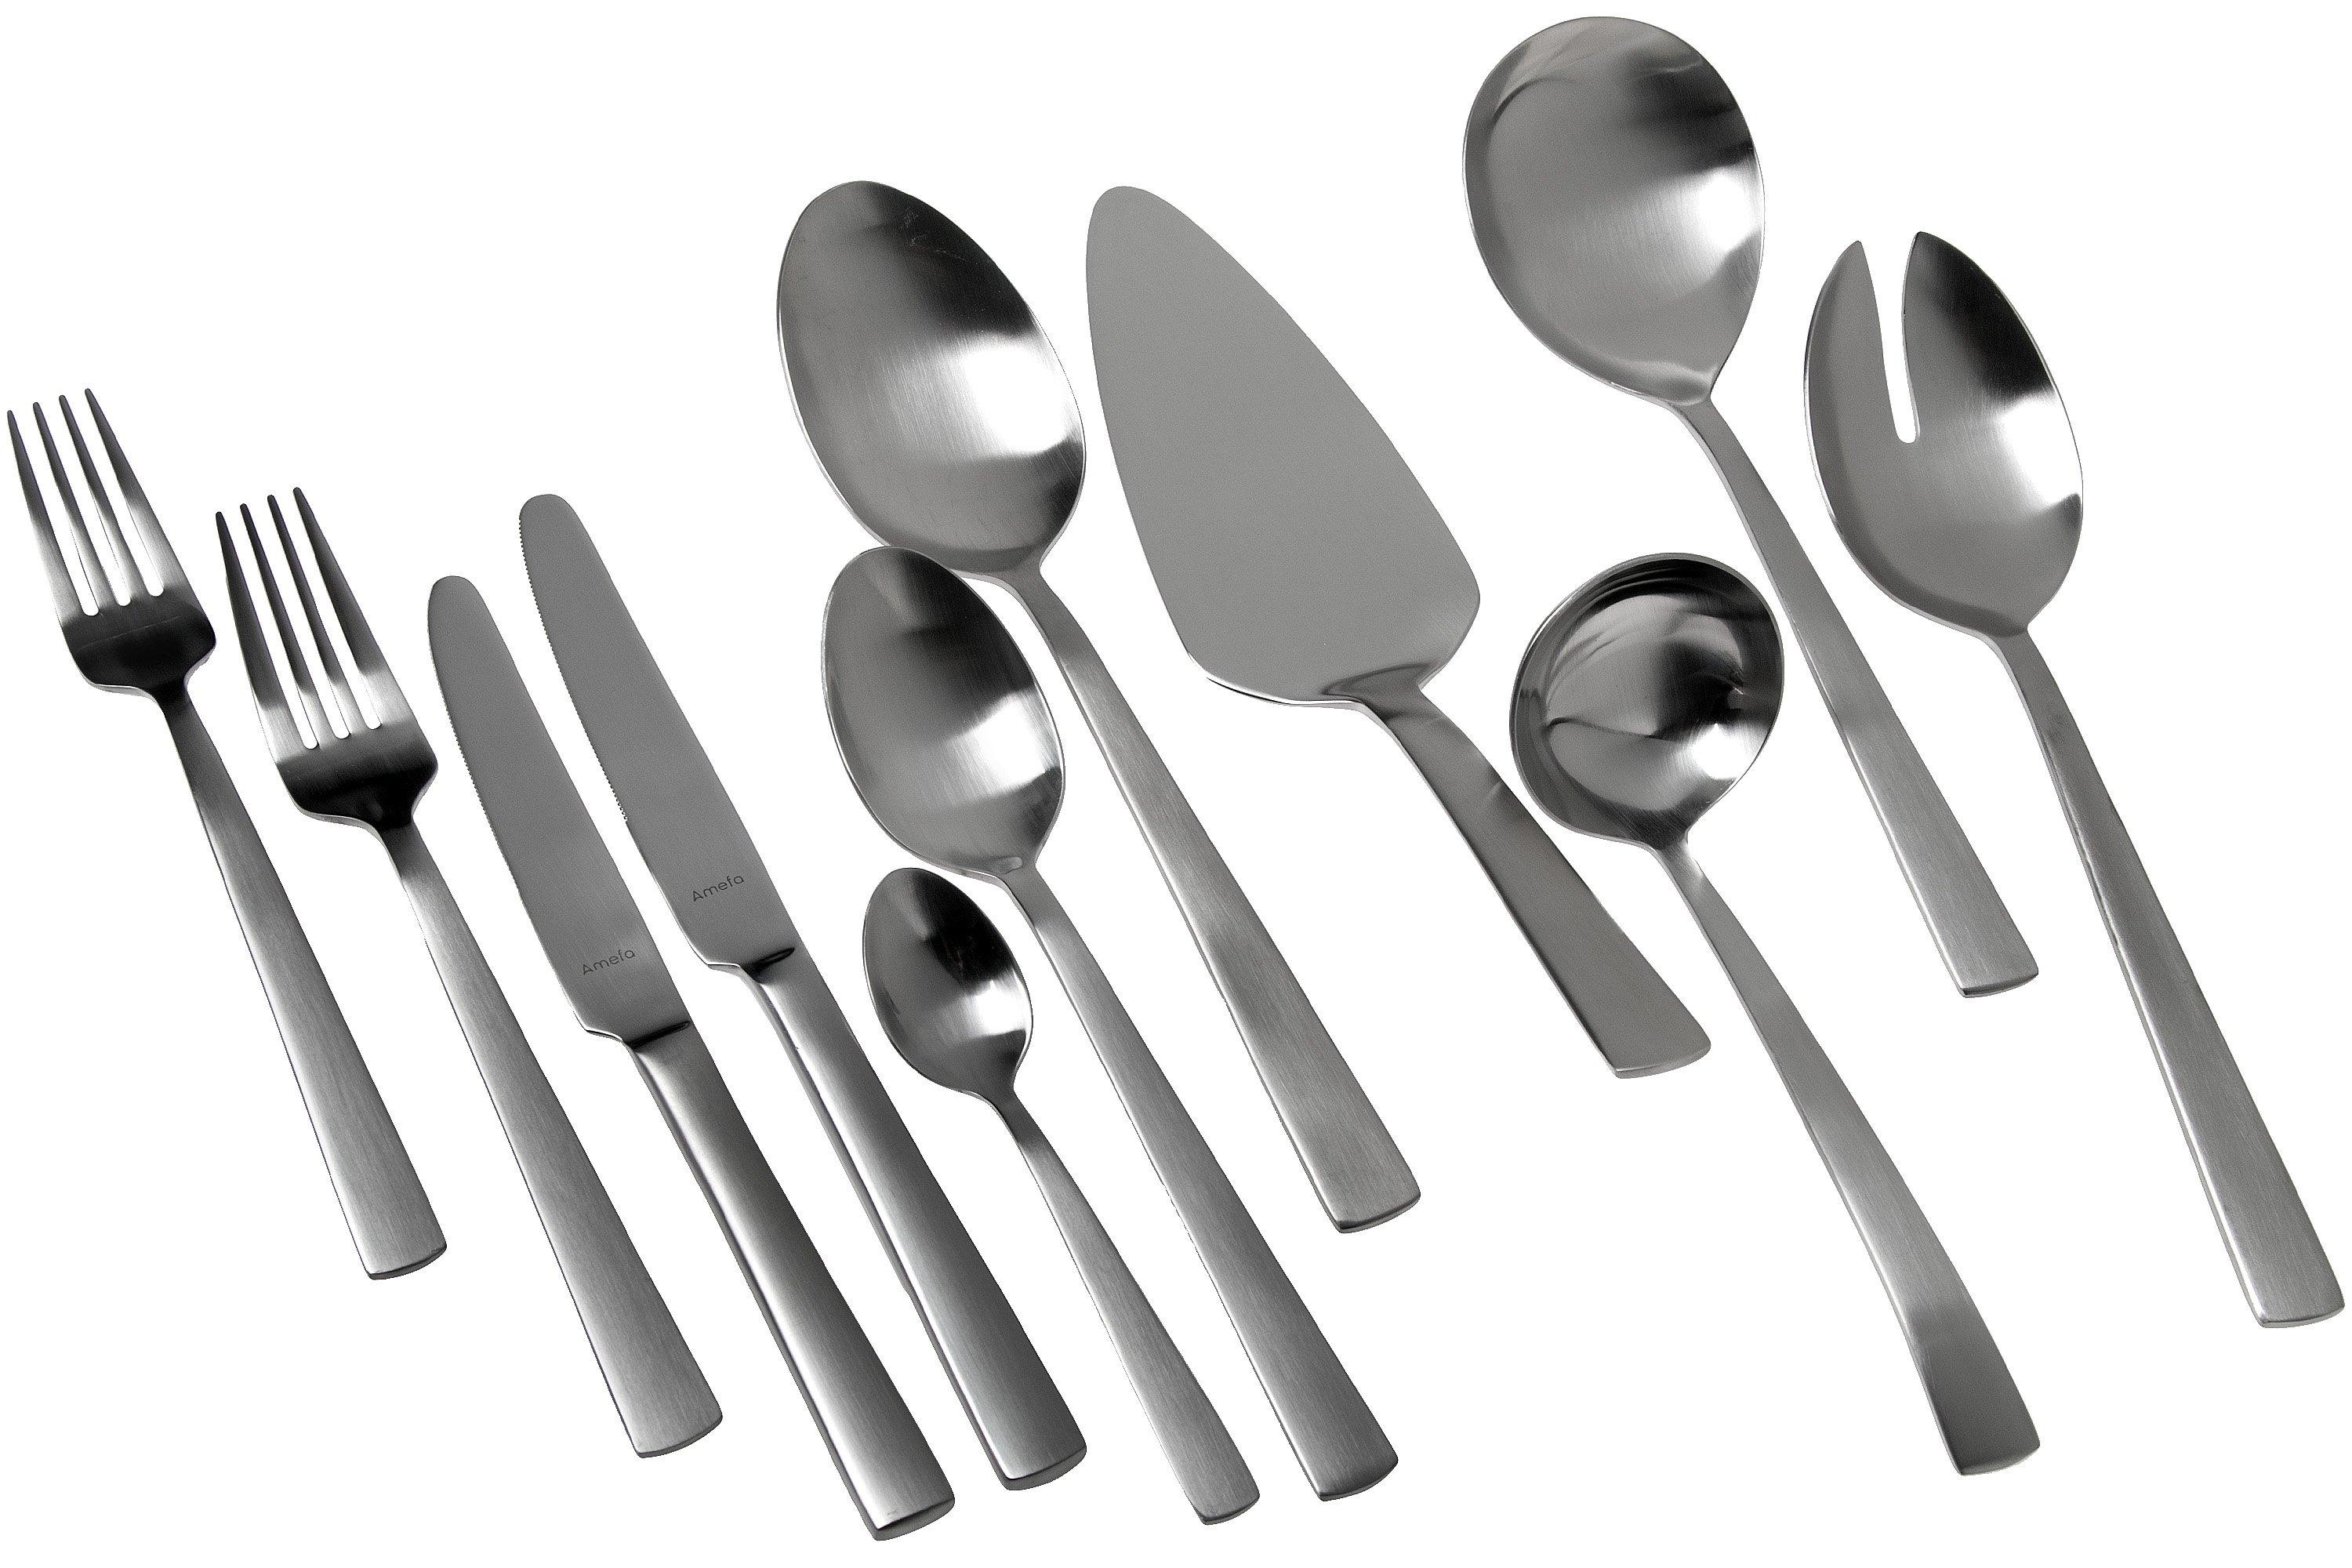 Verdorie intern Baffle Amefa Ventura 1924 78-piece cutlery set | Advantageously shopping at  Knivesandtools.com